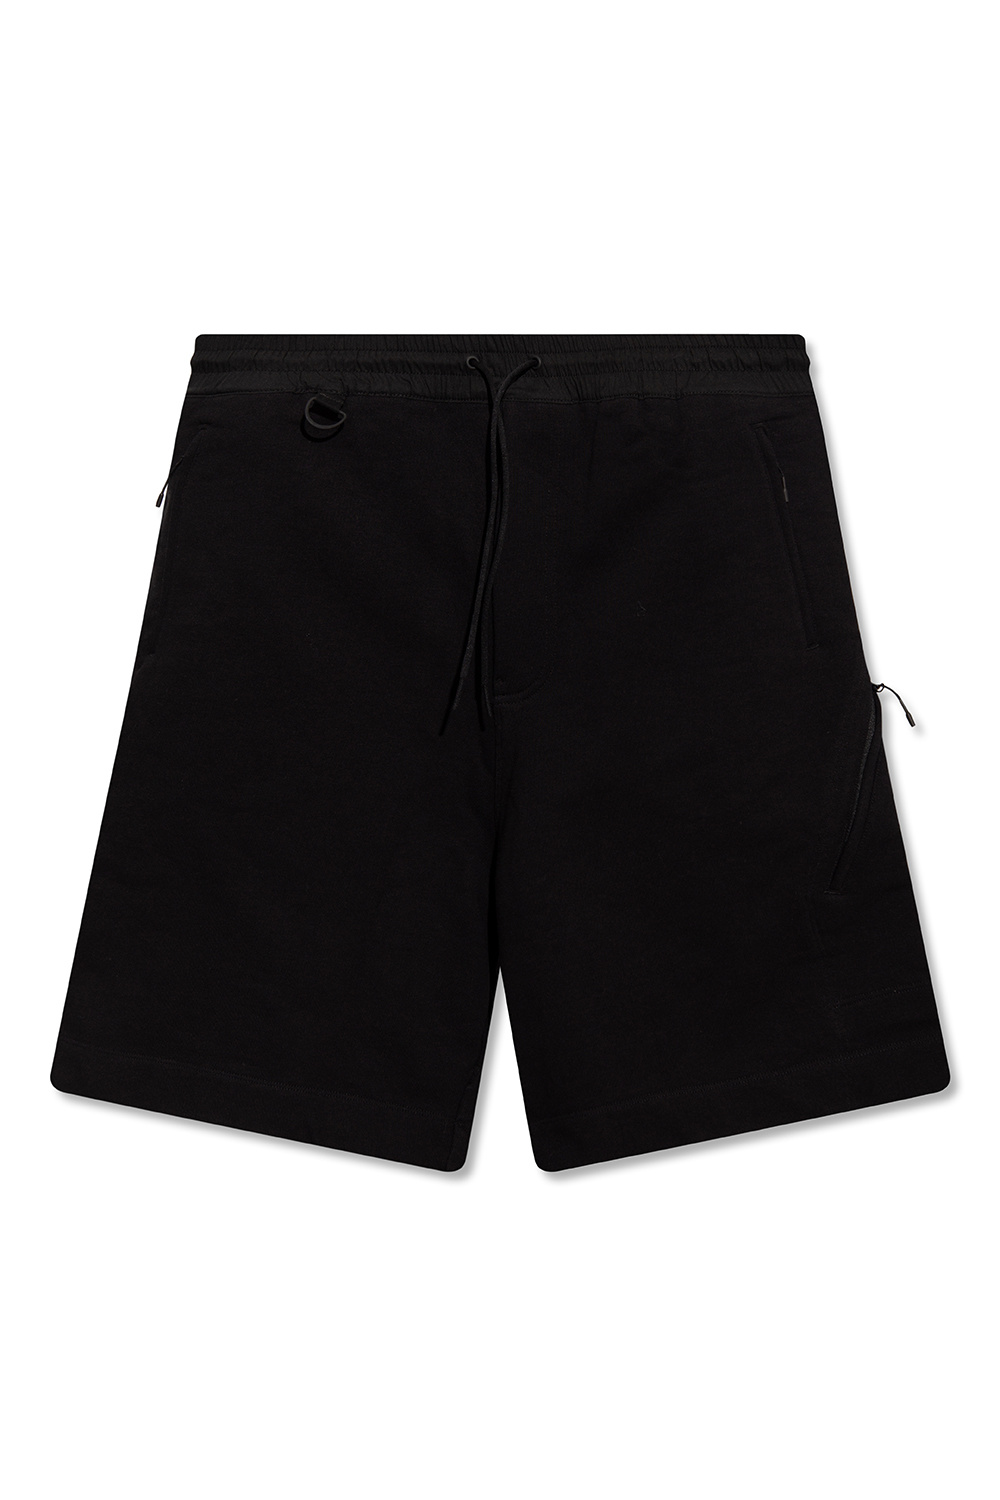 Y-3 Yohji Yamamoto Shorts with pockets